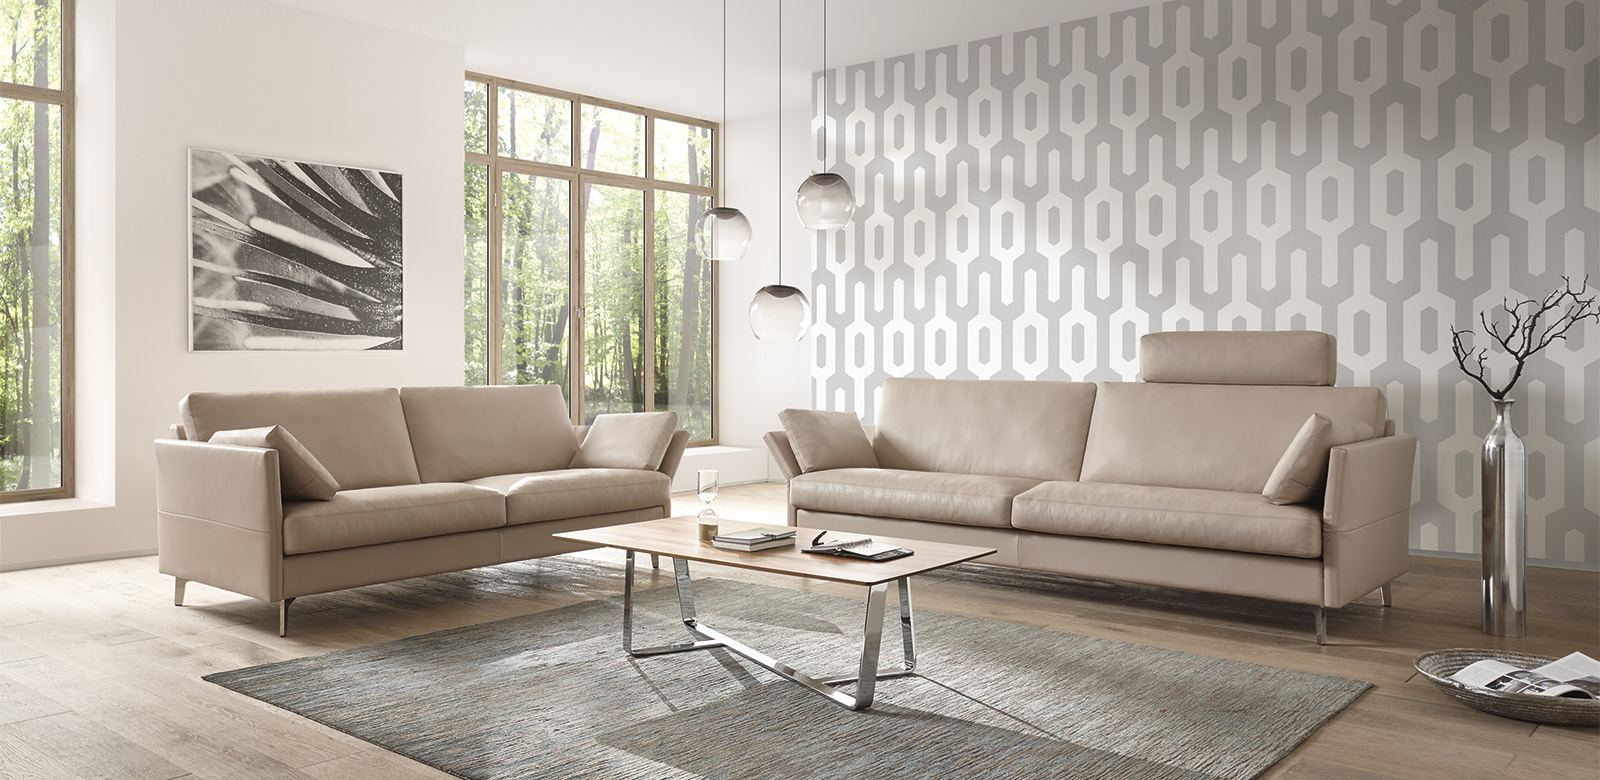 Twee CL990 sofa's in beige leer met hoofdsteun, armleuningkussens en verstelbare armleuningen in grote woonkamer met muur met symmetrisch patroon